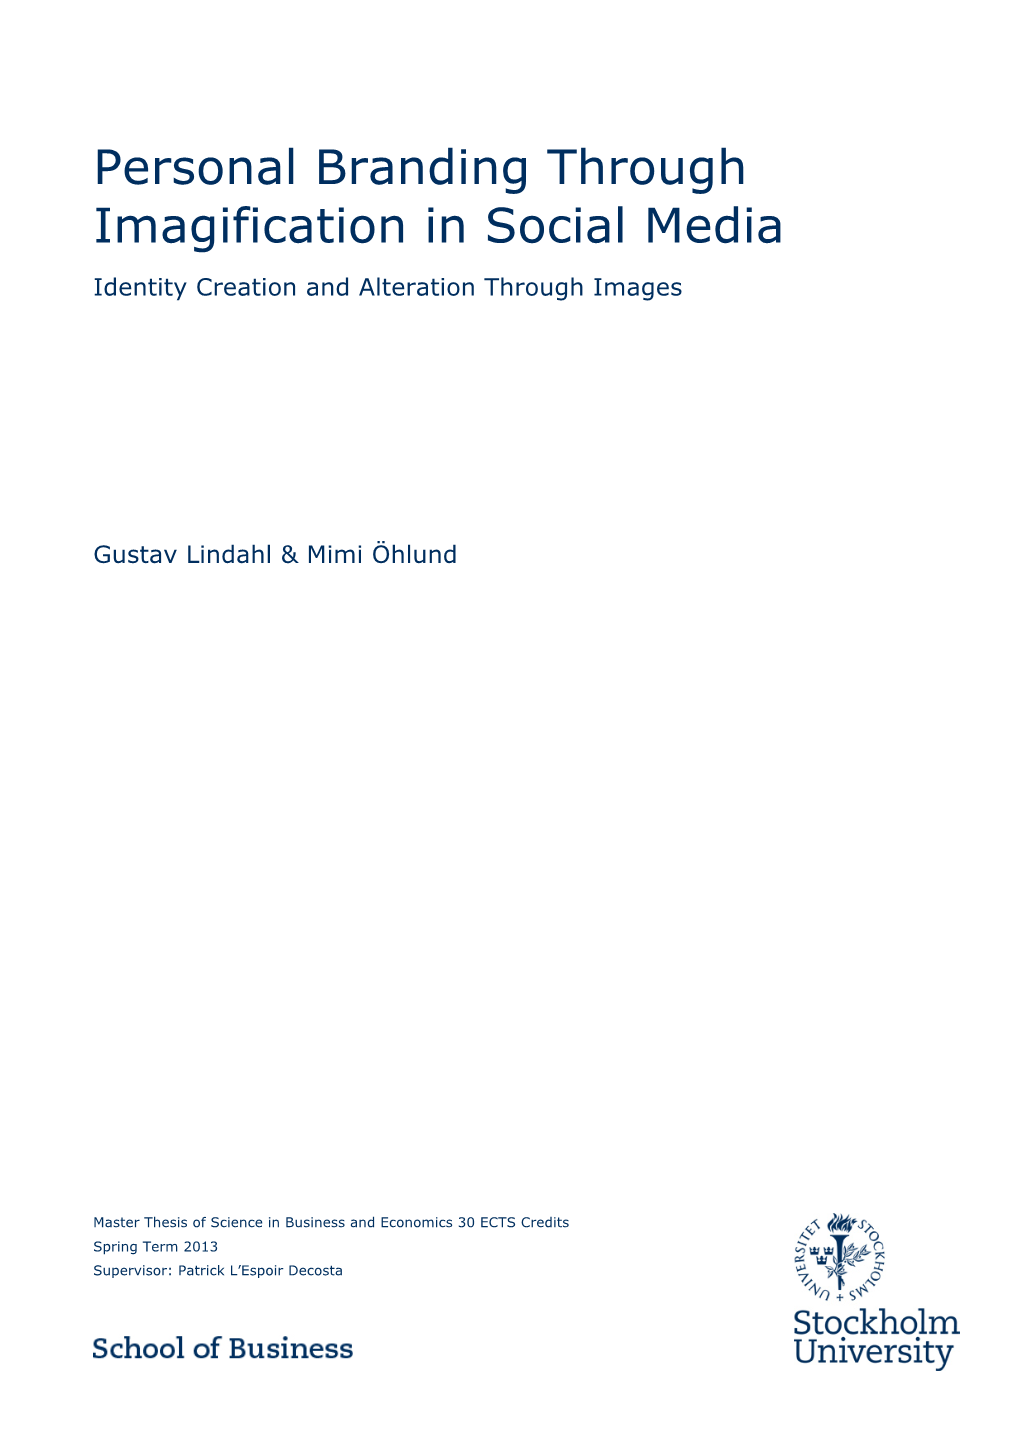 Personal Branding Through Imagification in Social Media